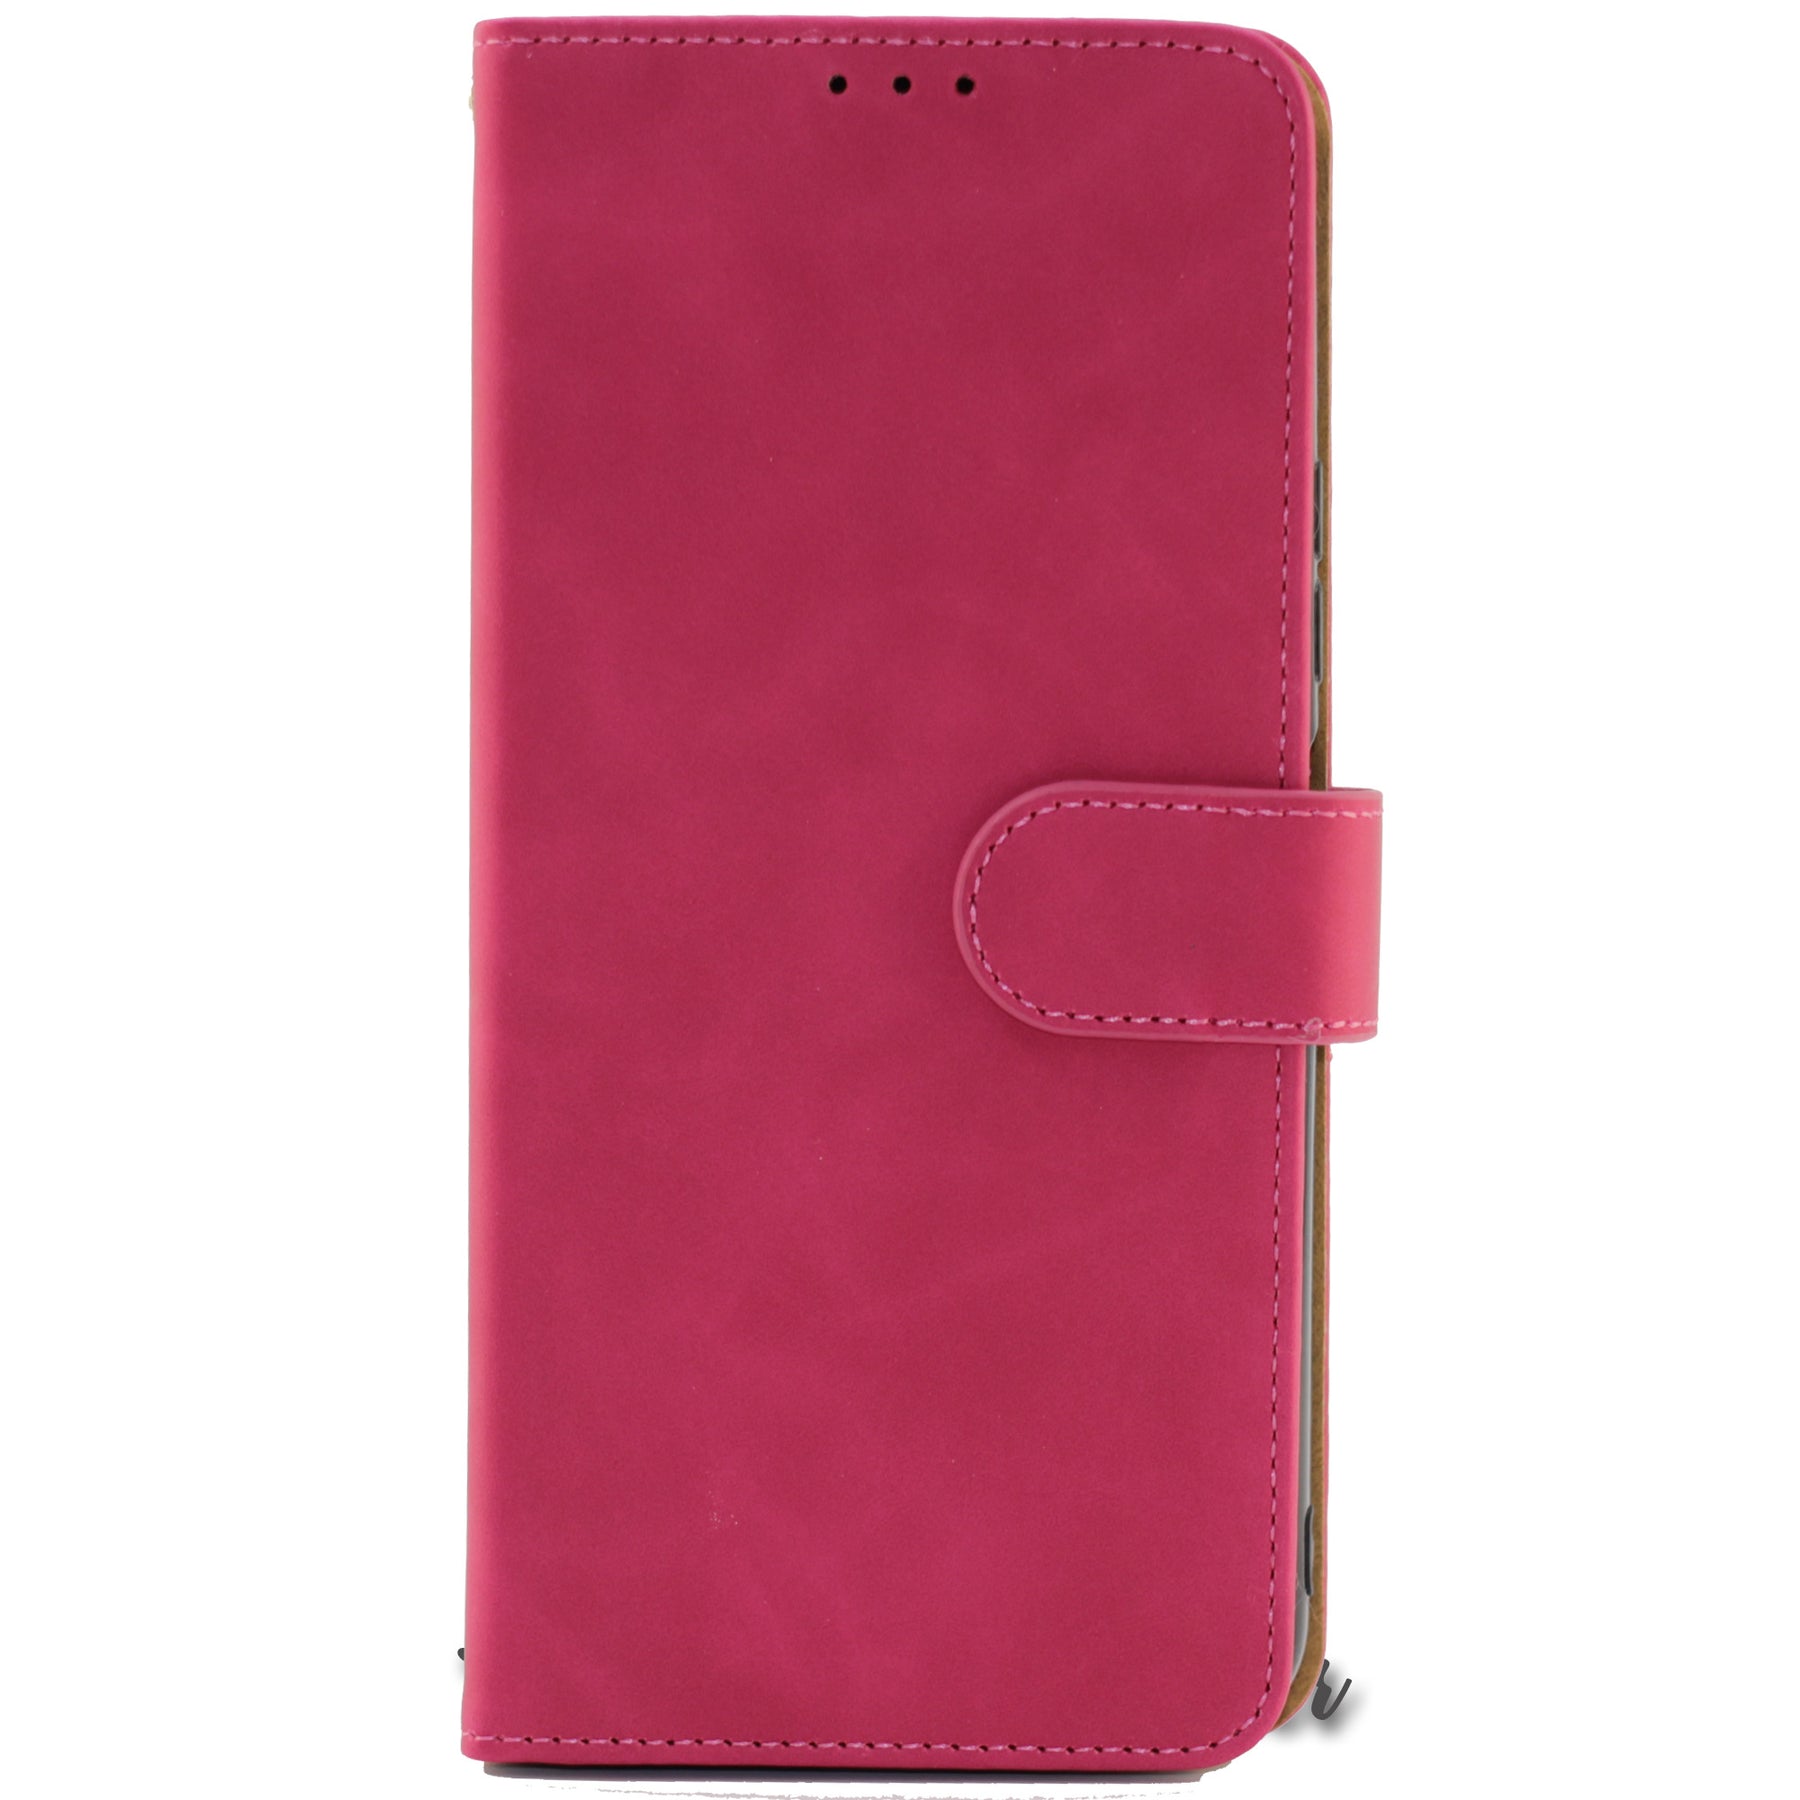 Nokia 5.4 pink wallet case